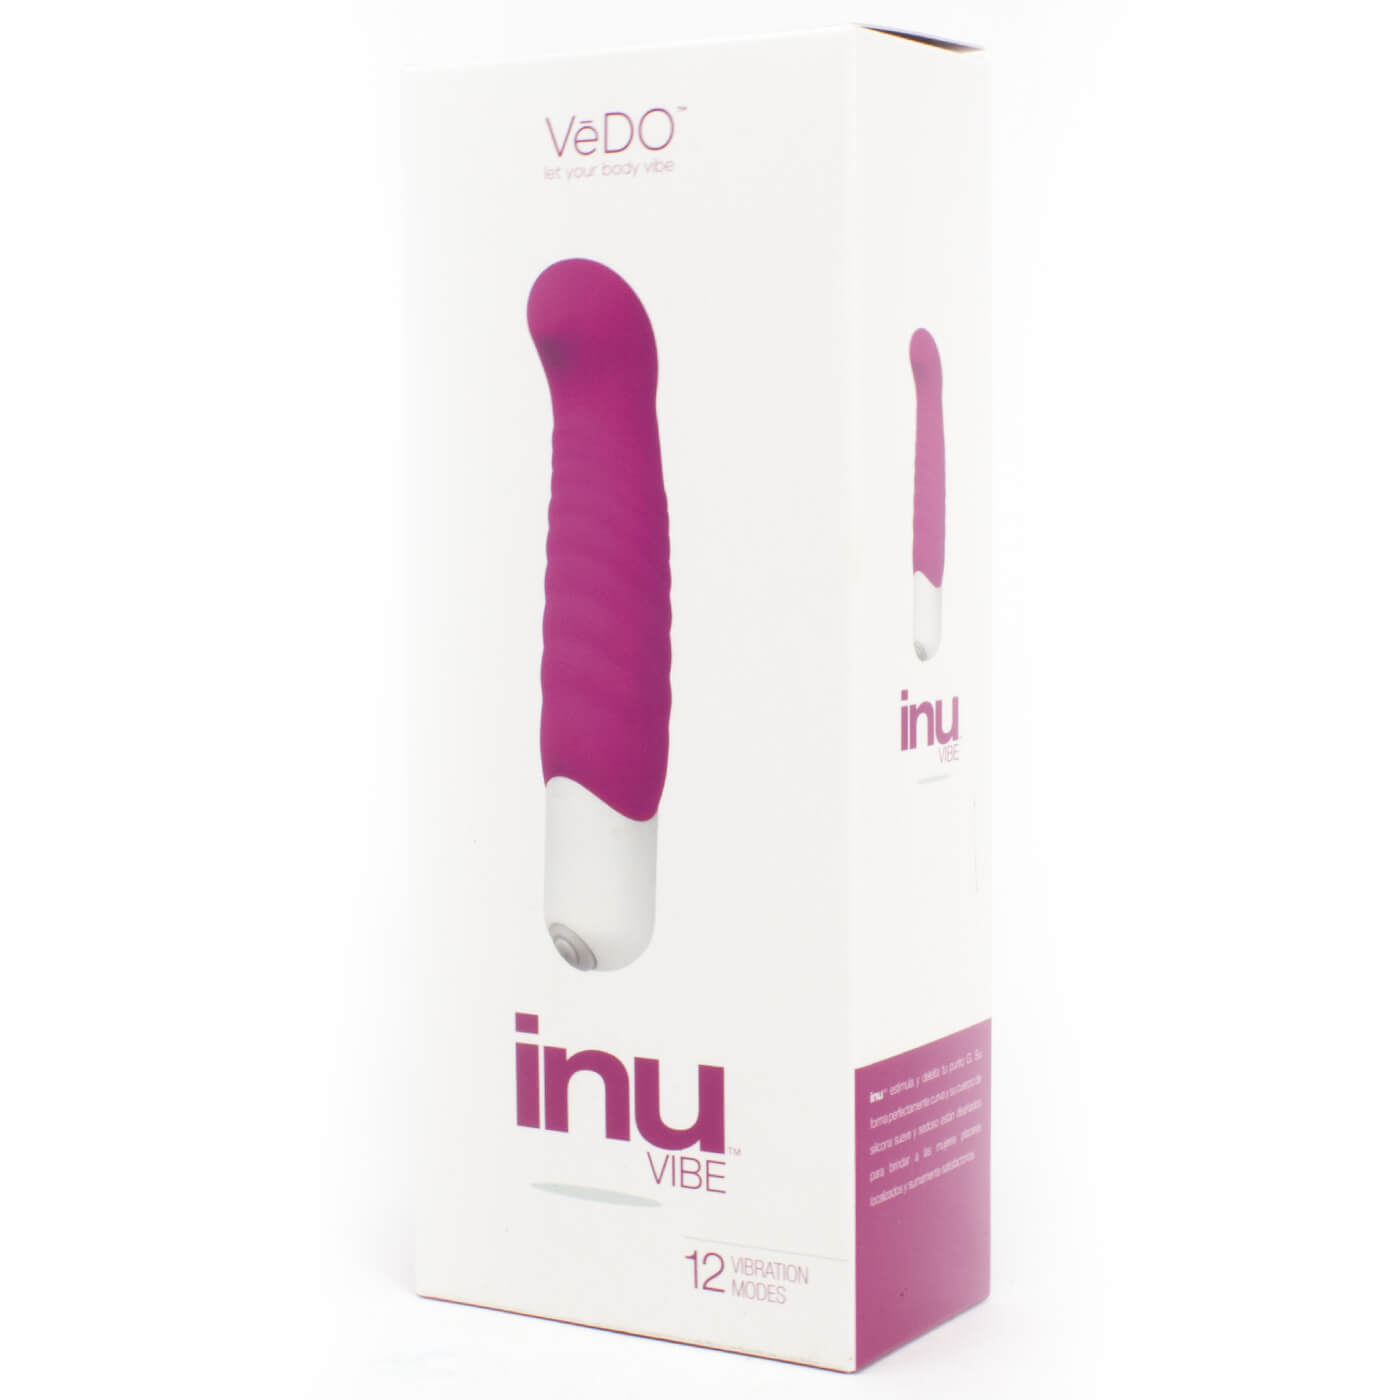 Vedo Inu Extra Quiet 12 Function Powerful G-Spot Vibrator